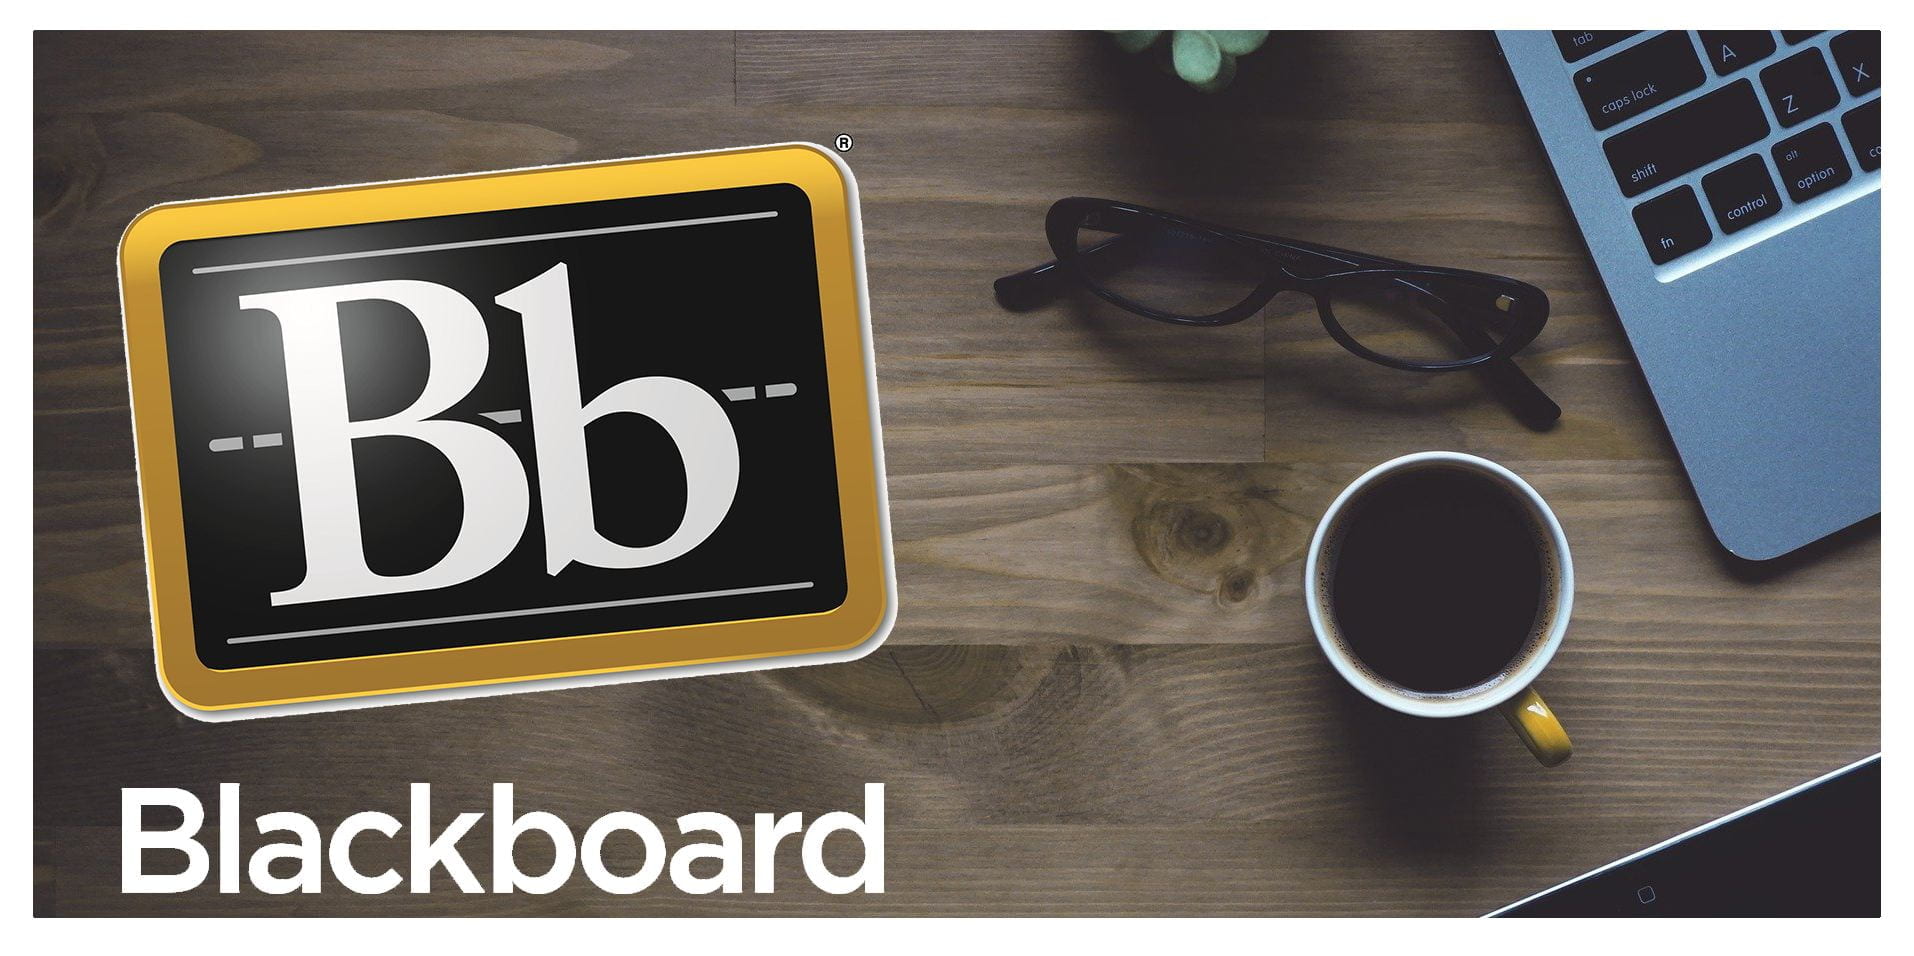 Laptop and Blackboard logo.